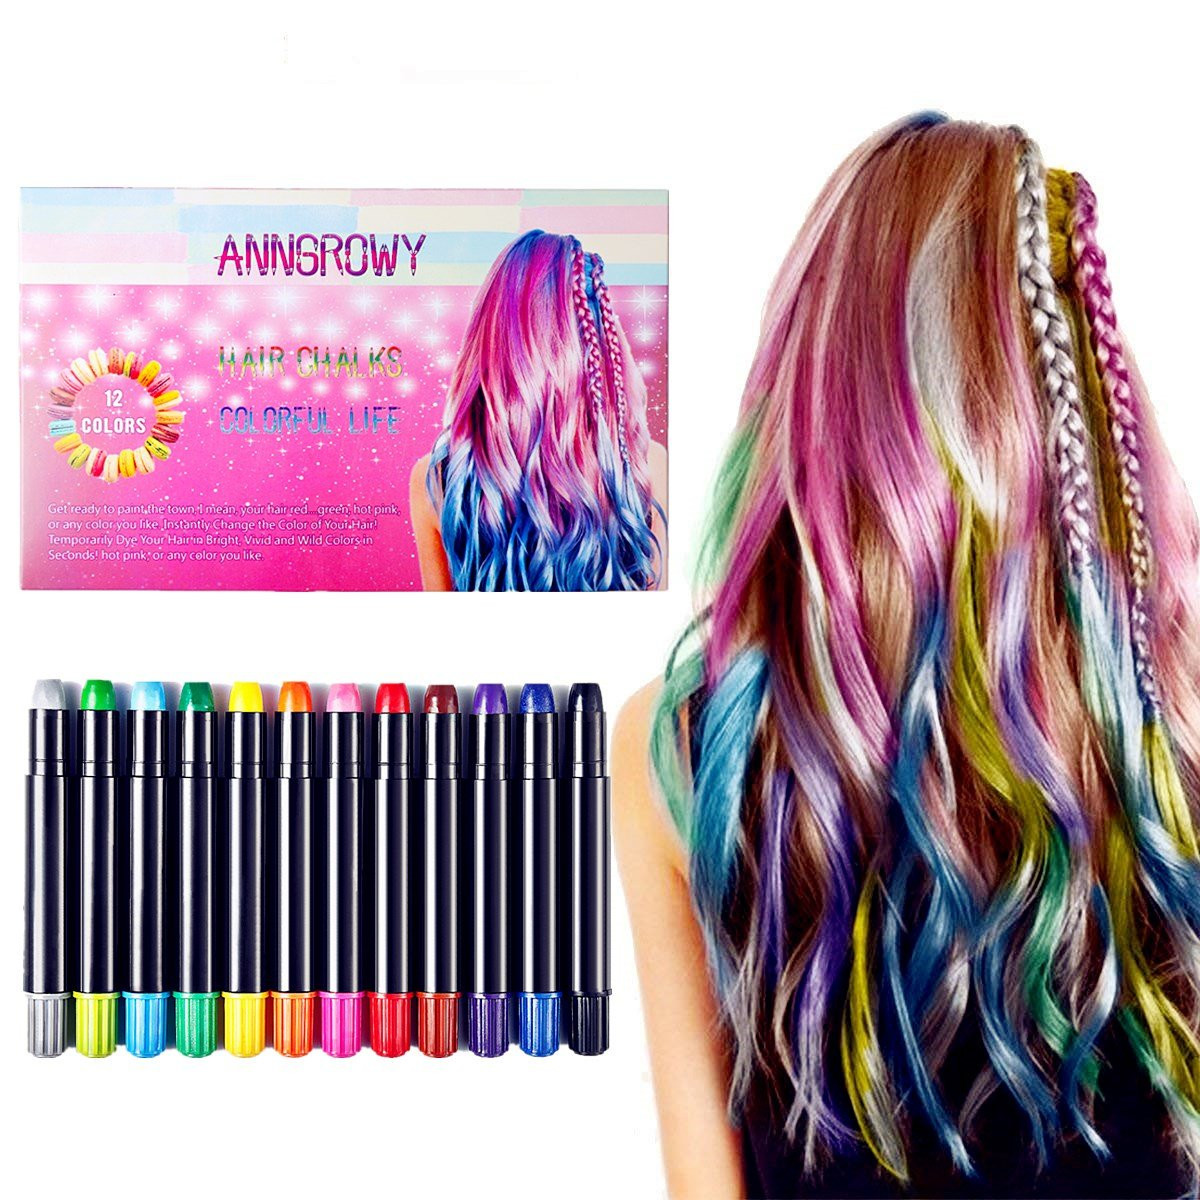 Washable Hair Coloring For Kids
 Amazon Ameauty Hair Chalk Set 24 Hair Dye Colors Non